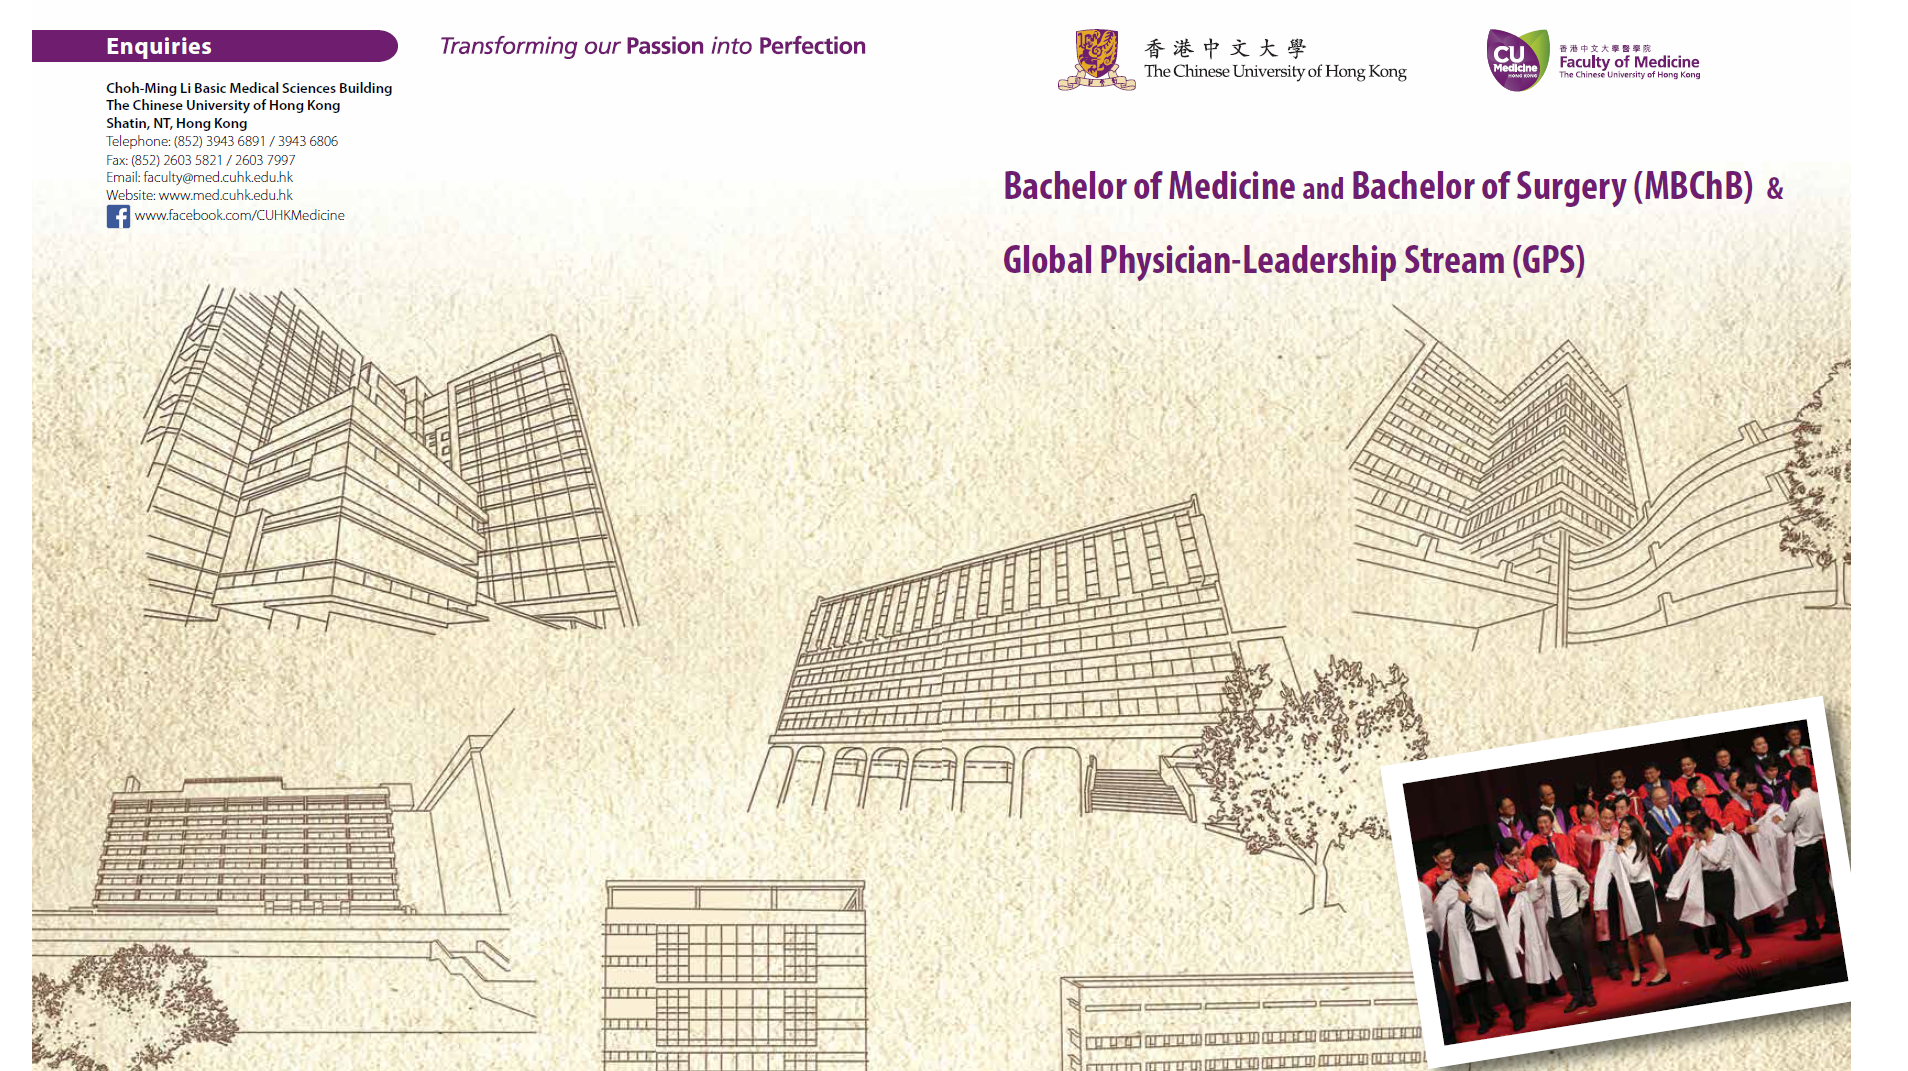 CUHK Medicine Faculty Brochure 2015